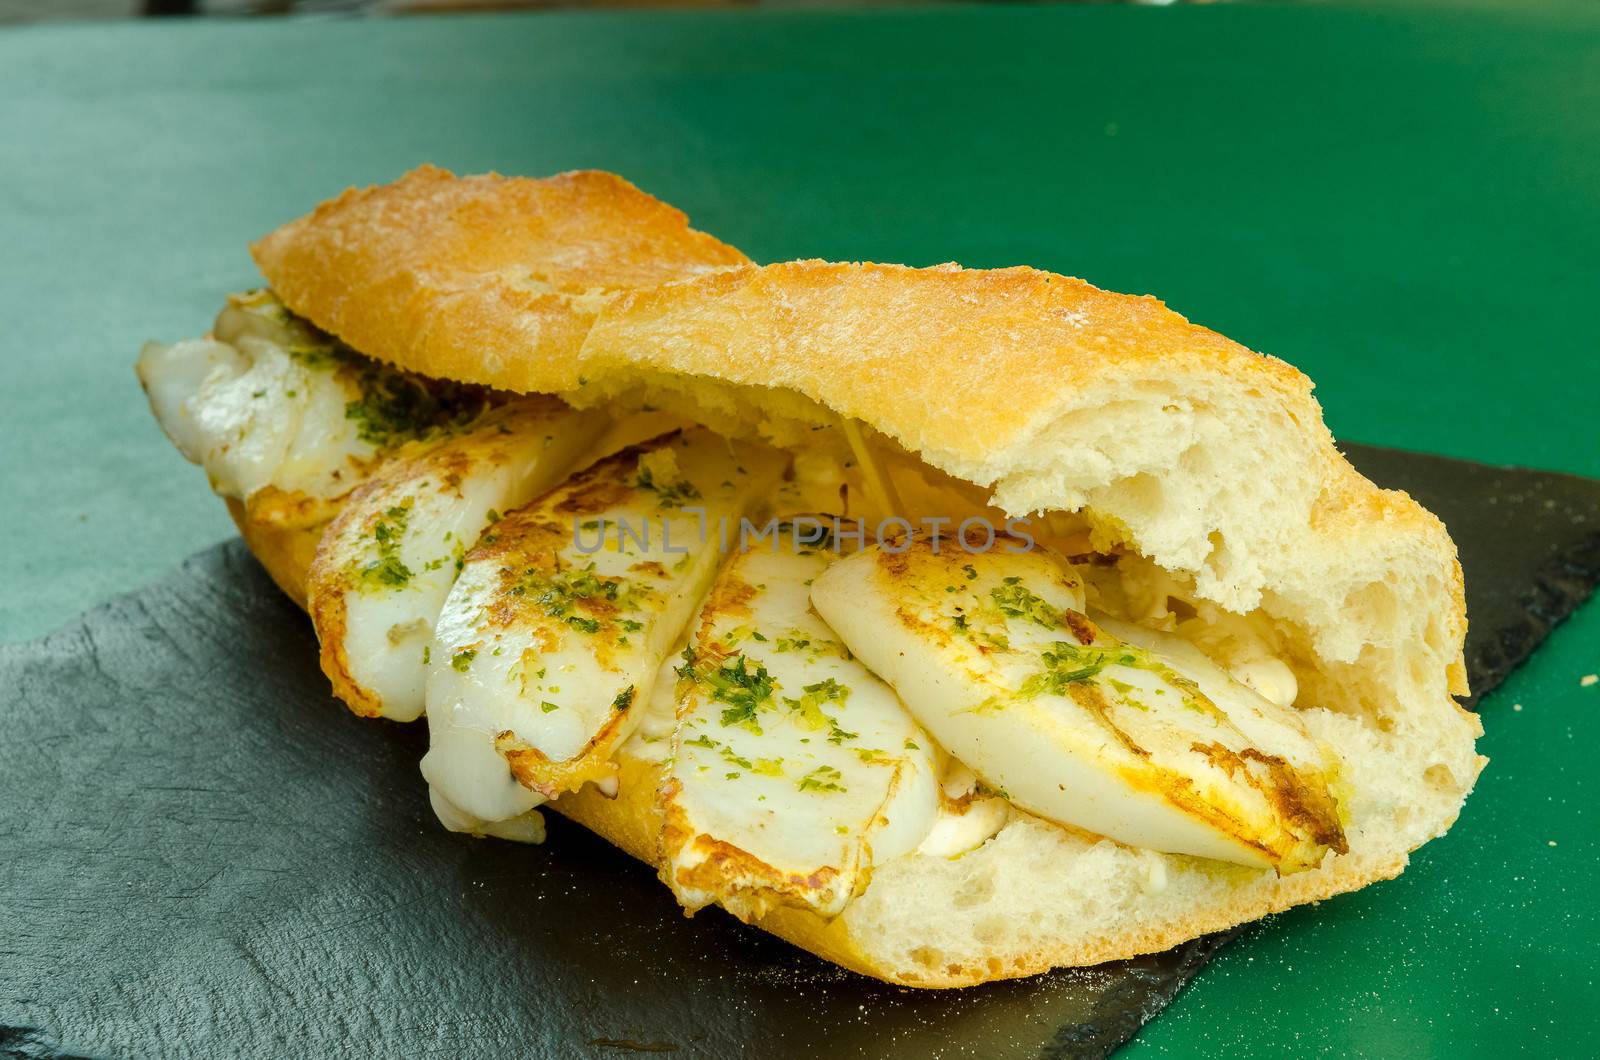 sepia sandwich by bpardofotografia